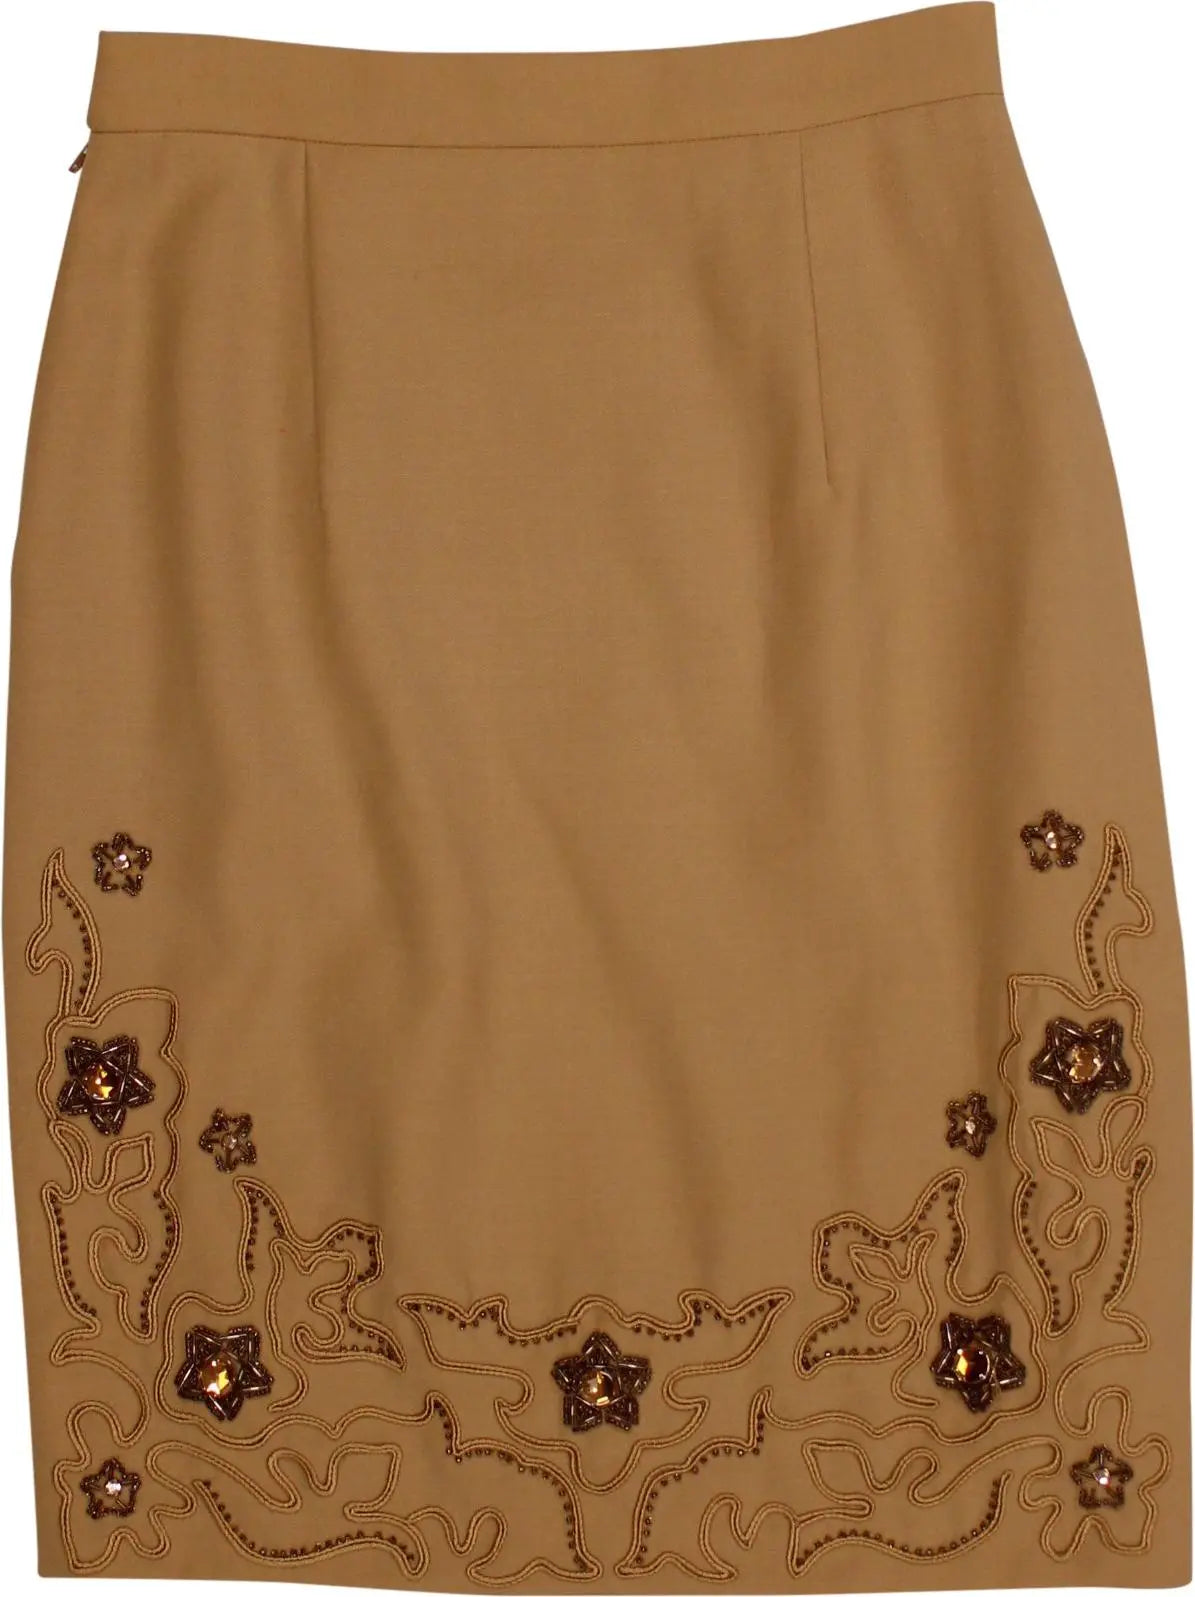 Alberta Ferretti - Beaded Italian Skirt- ThriftTale.com - Vintage and second handclothing